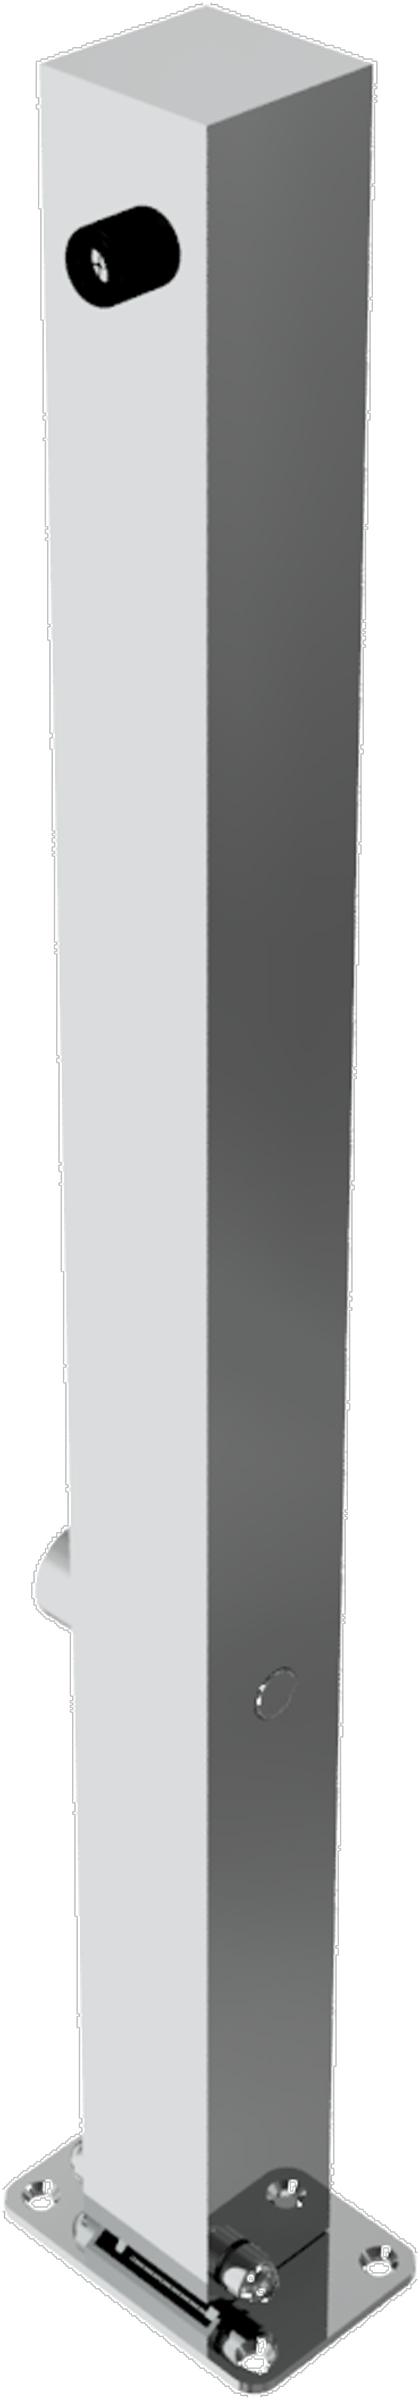 Schake Edelstahlpfosten UDD 70 x 70 mm